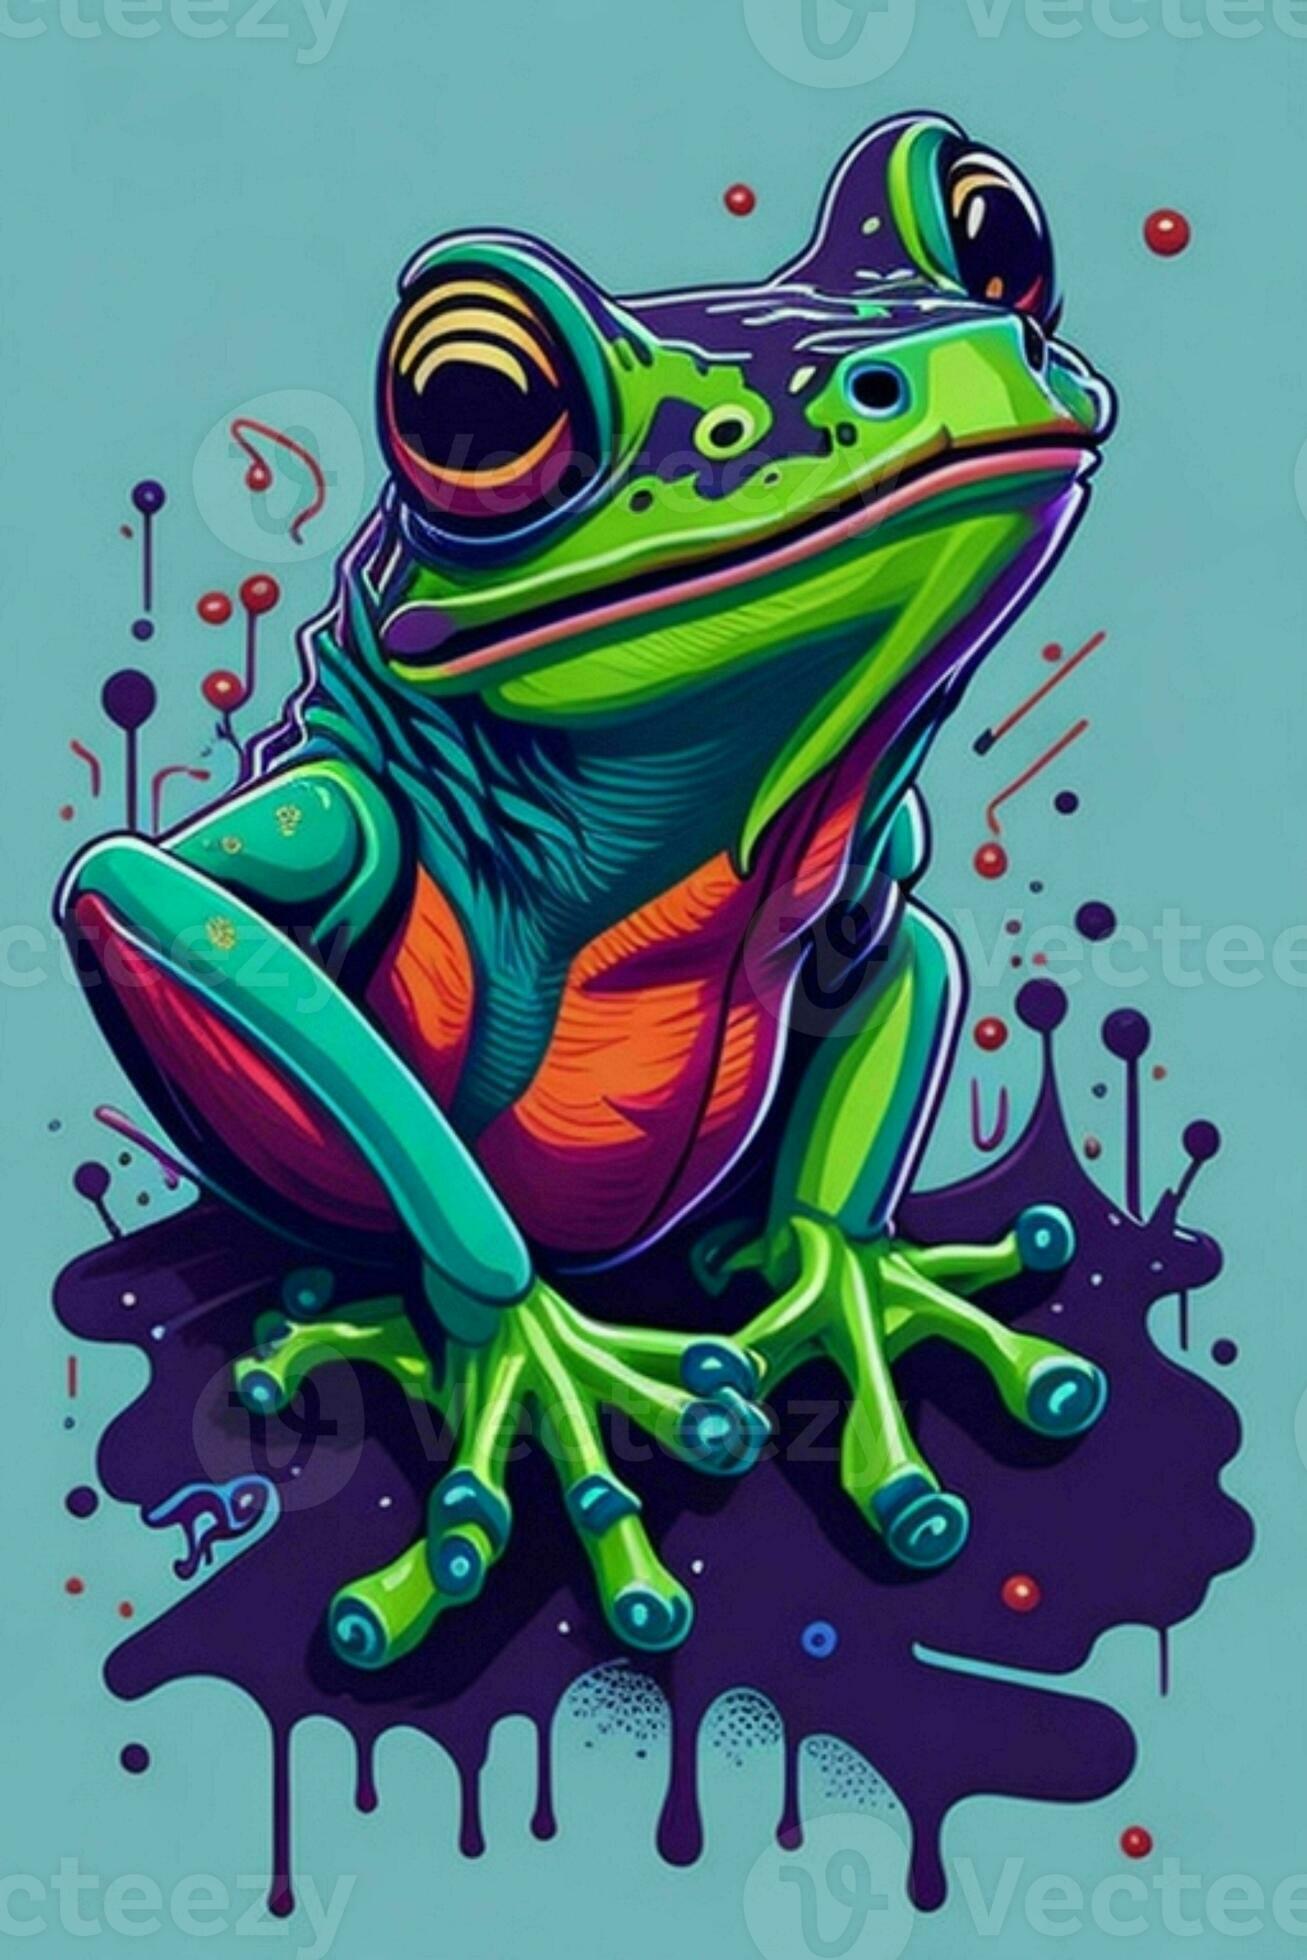 Frog art wallpaper